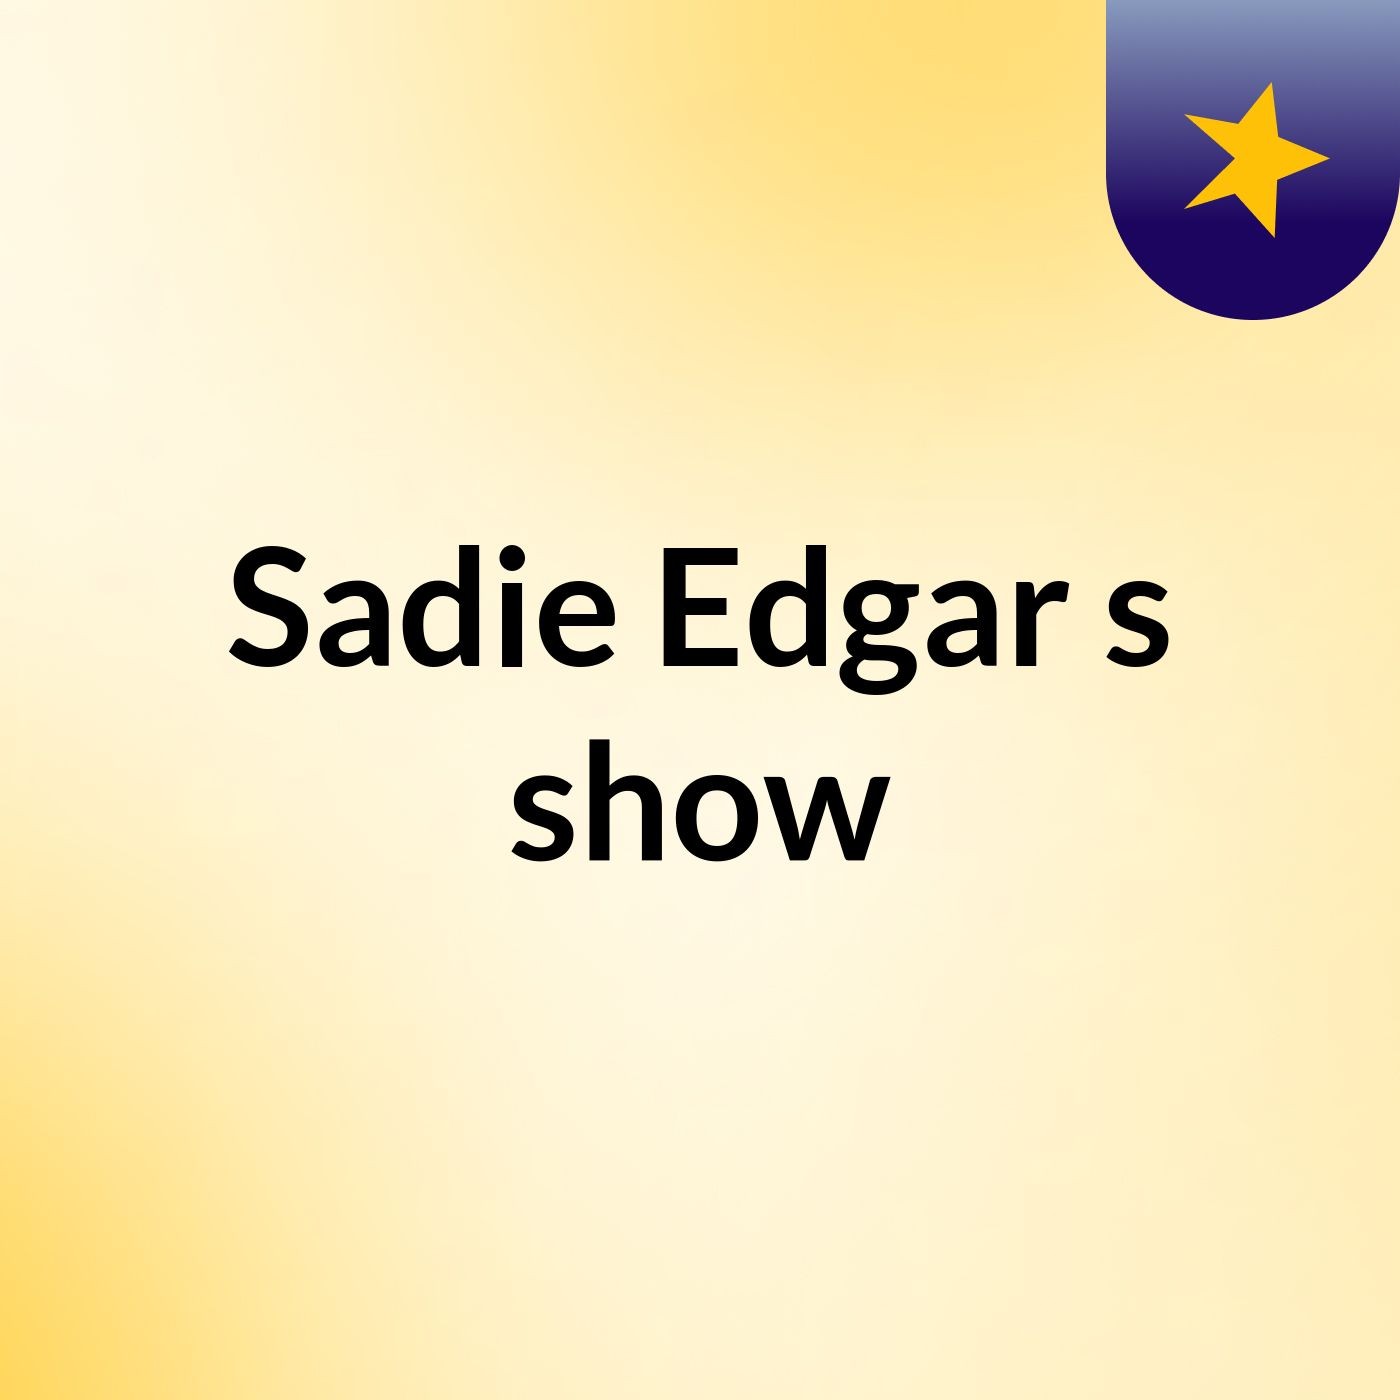 Sadie Edgar's show